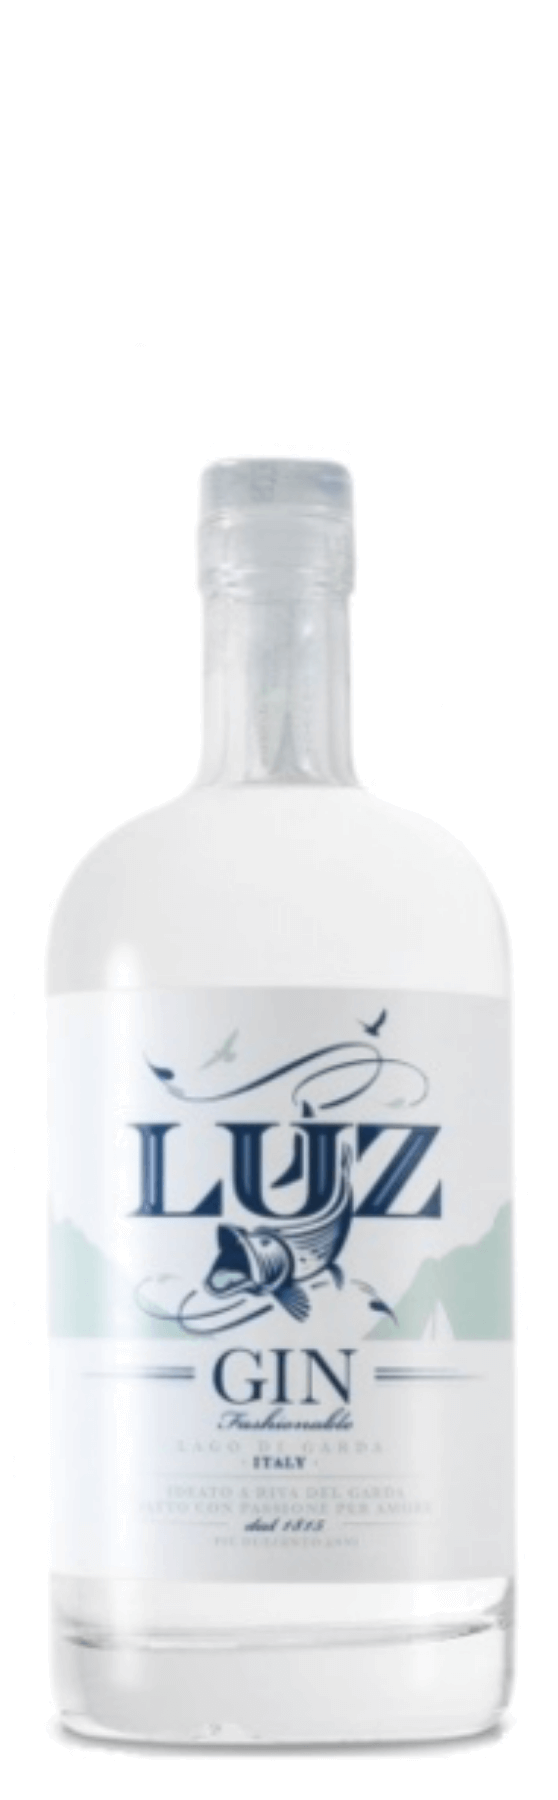 Gin Luz Original